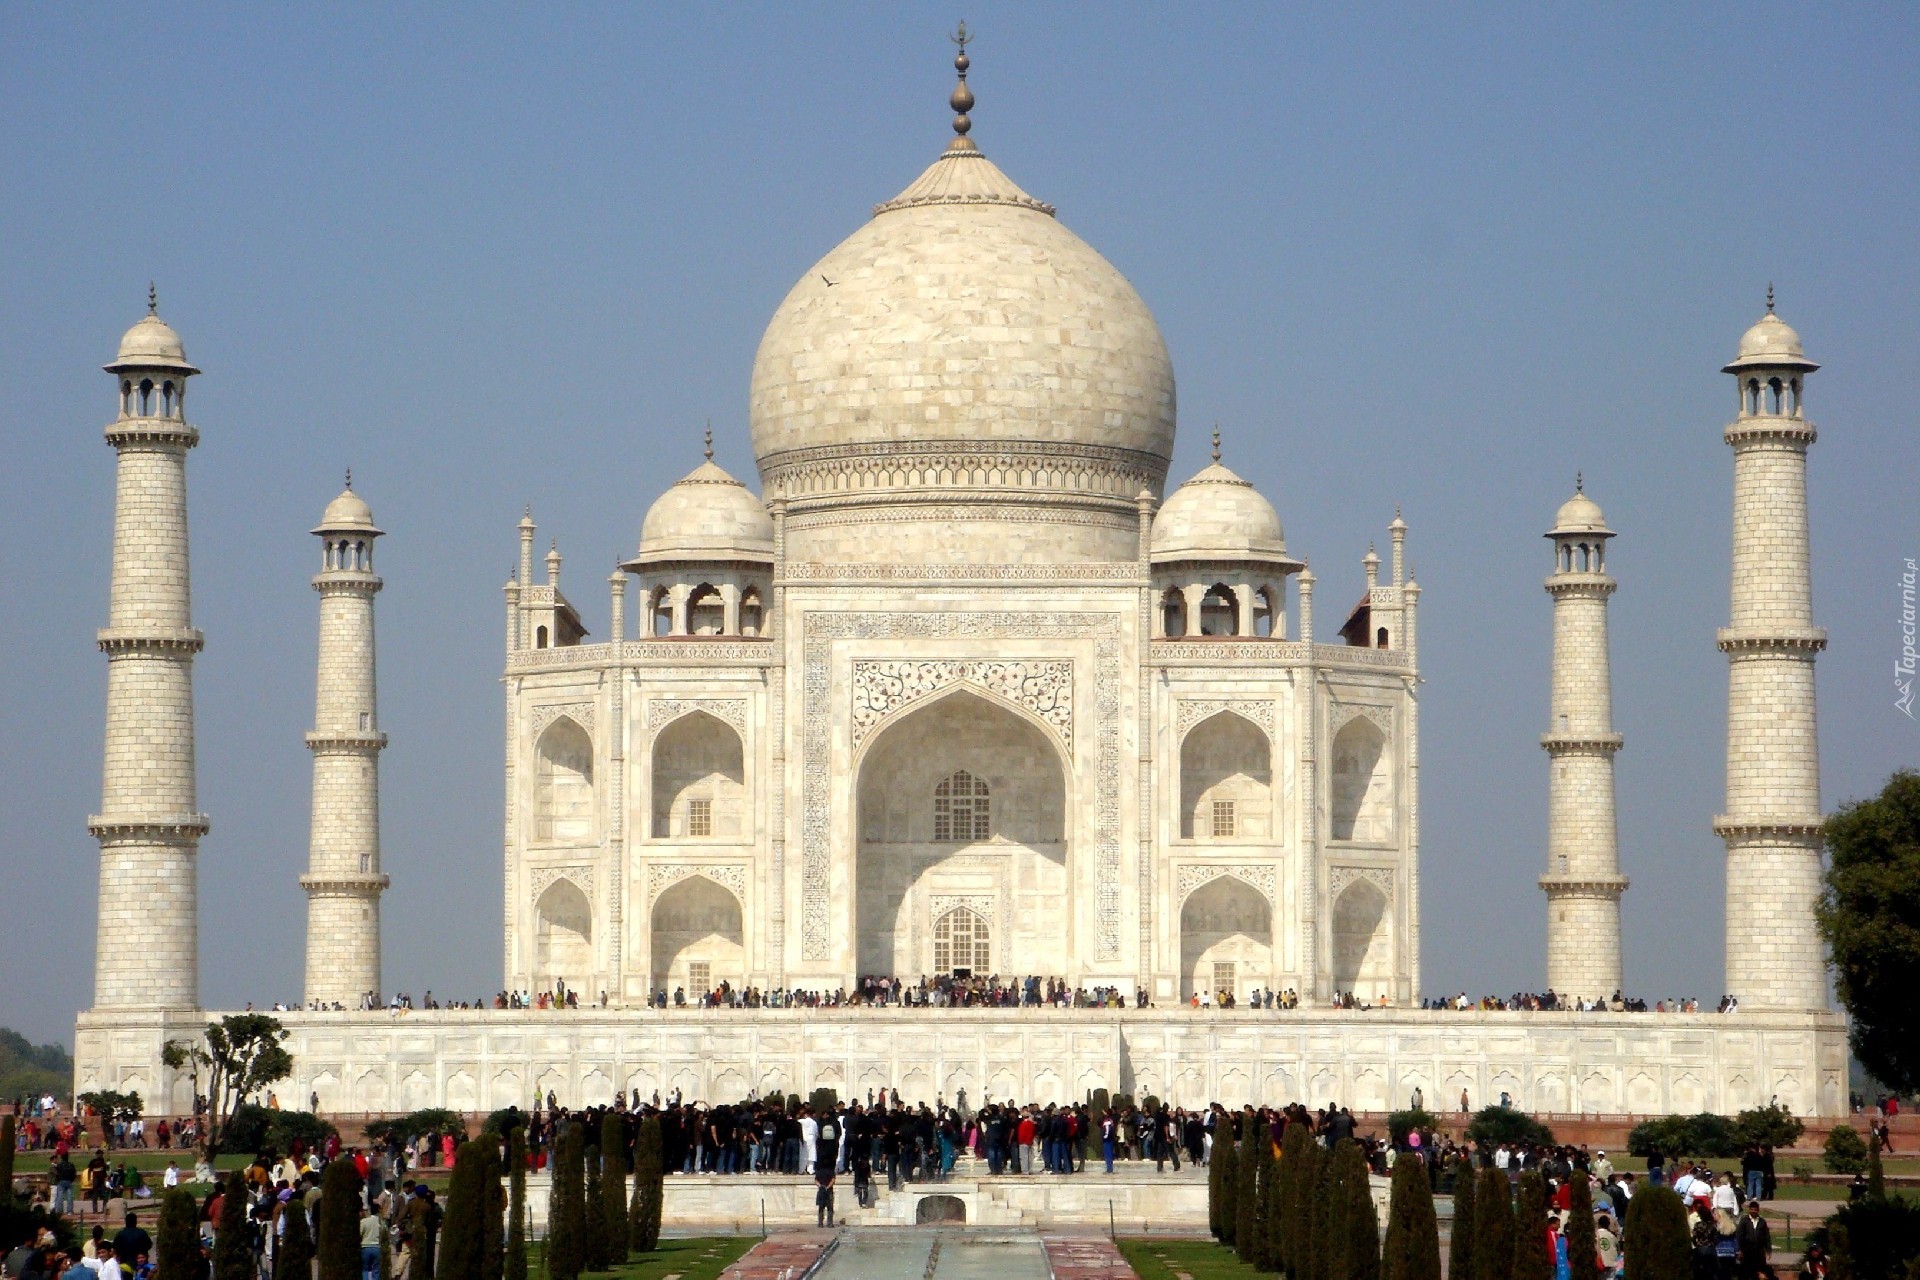 Indie, Agra, Tadź Mahal